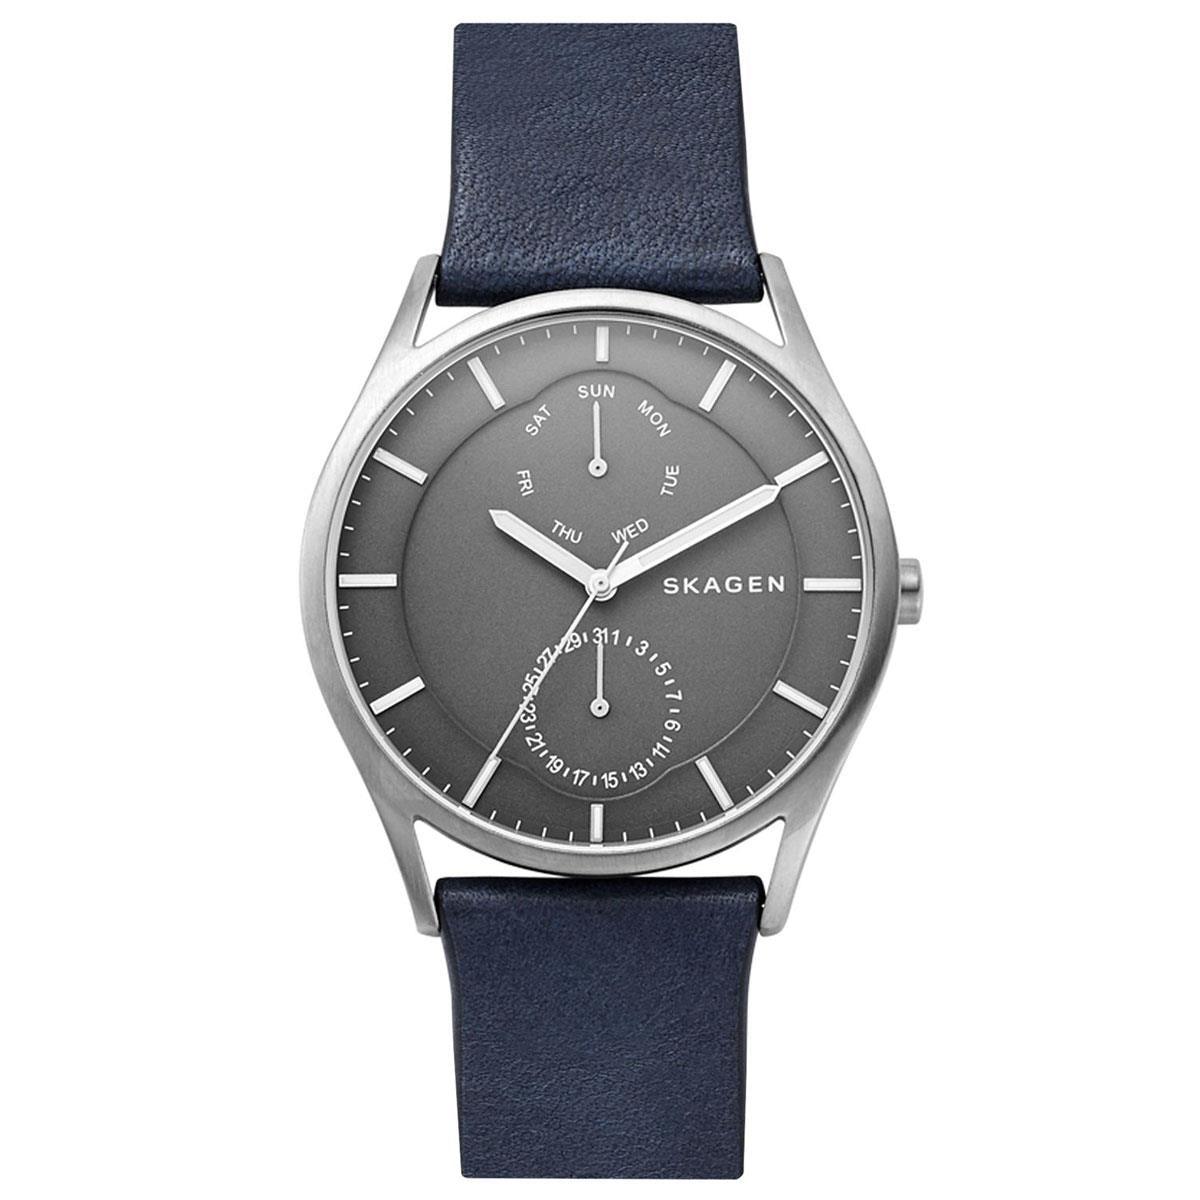 Skagen Men's Watches - Watch Home™